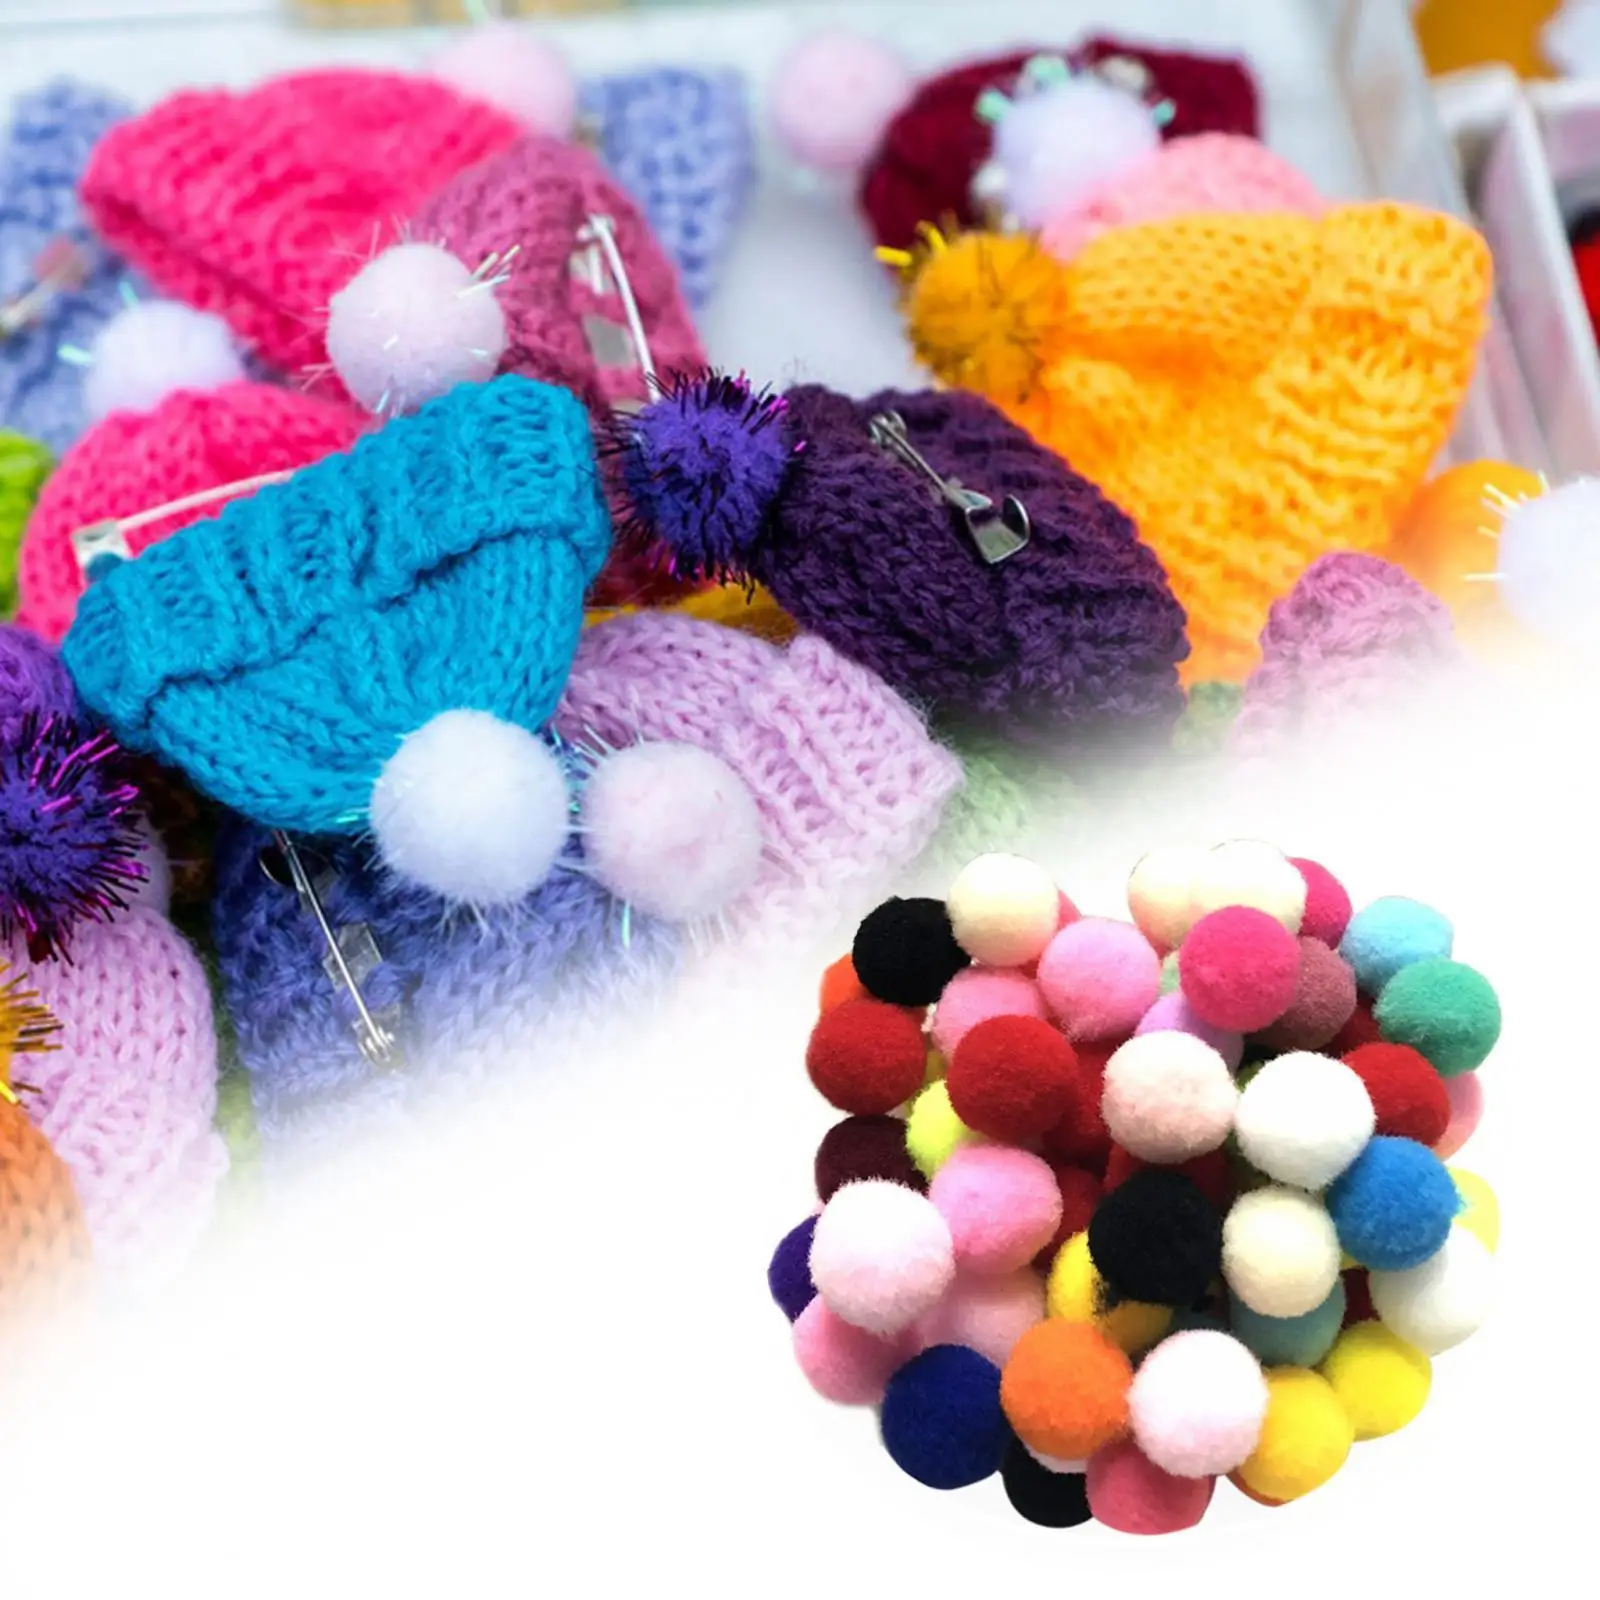 100Pcs Assorted pompoms Kids Craft Arts Pom Poms Balls Bright Colors Balls Cute Balls for Festival Wedding Toys Party Decoration